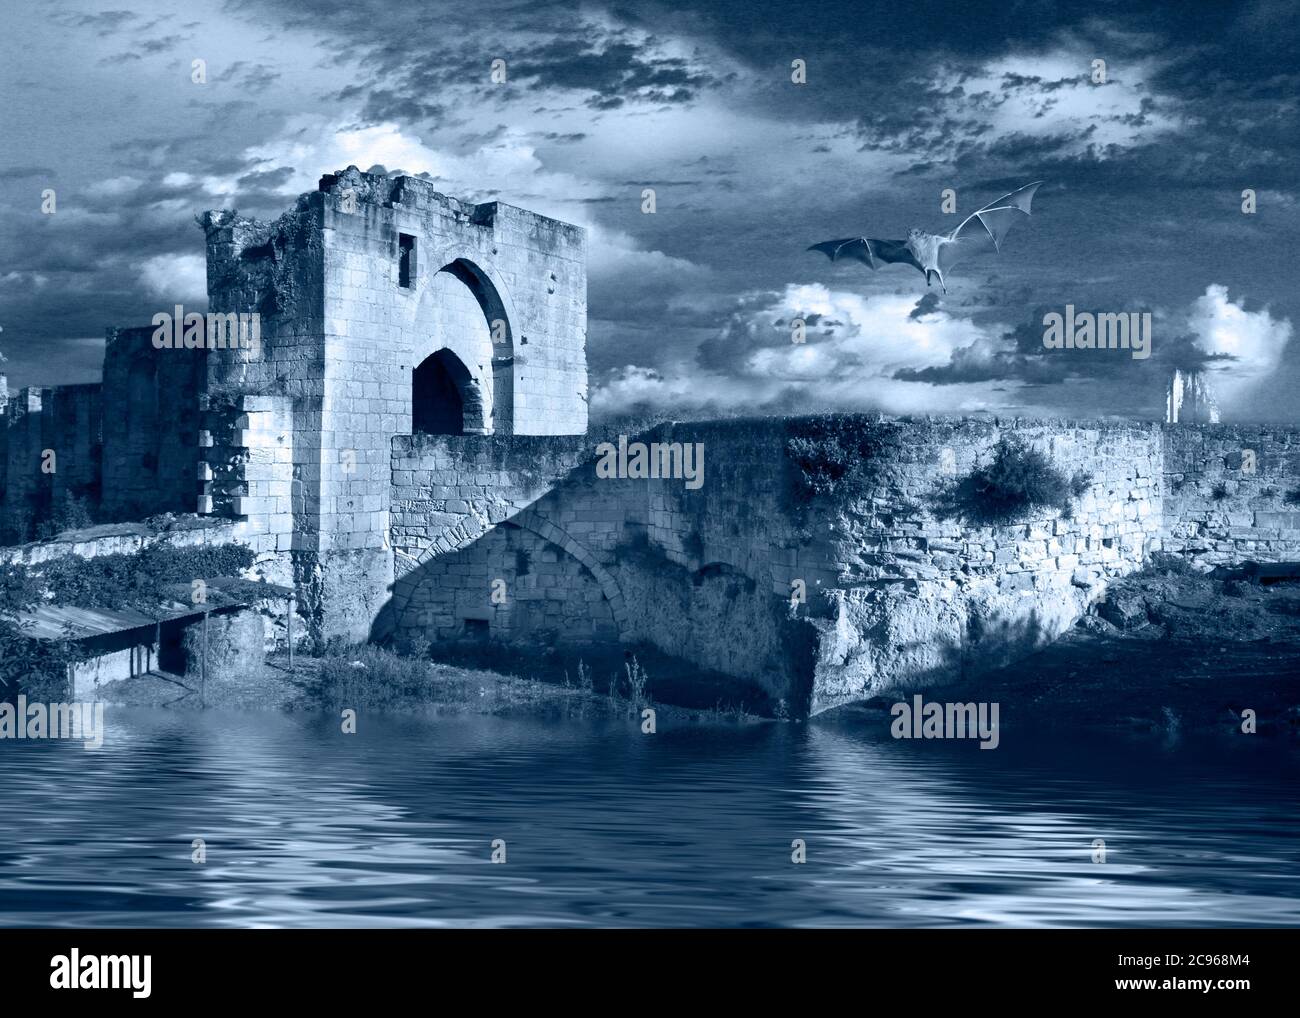 Brunet Gate medieval castle city gate night scene with bat in Saint Emilion France Stock Photo